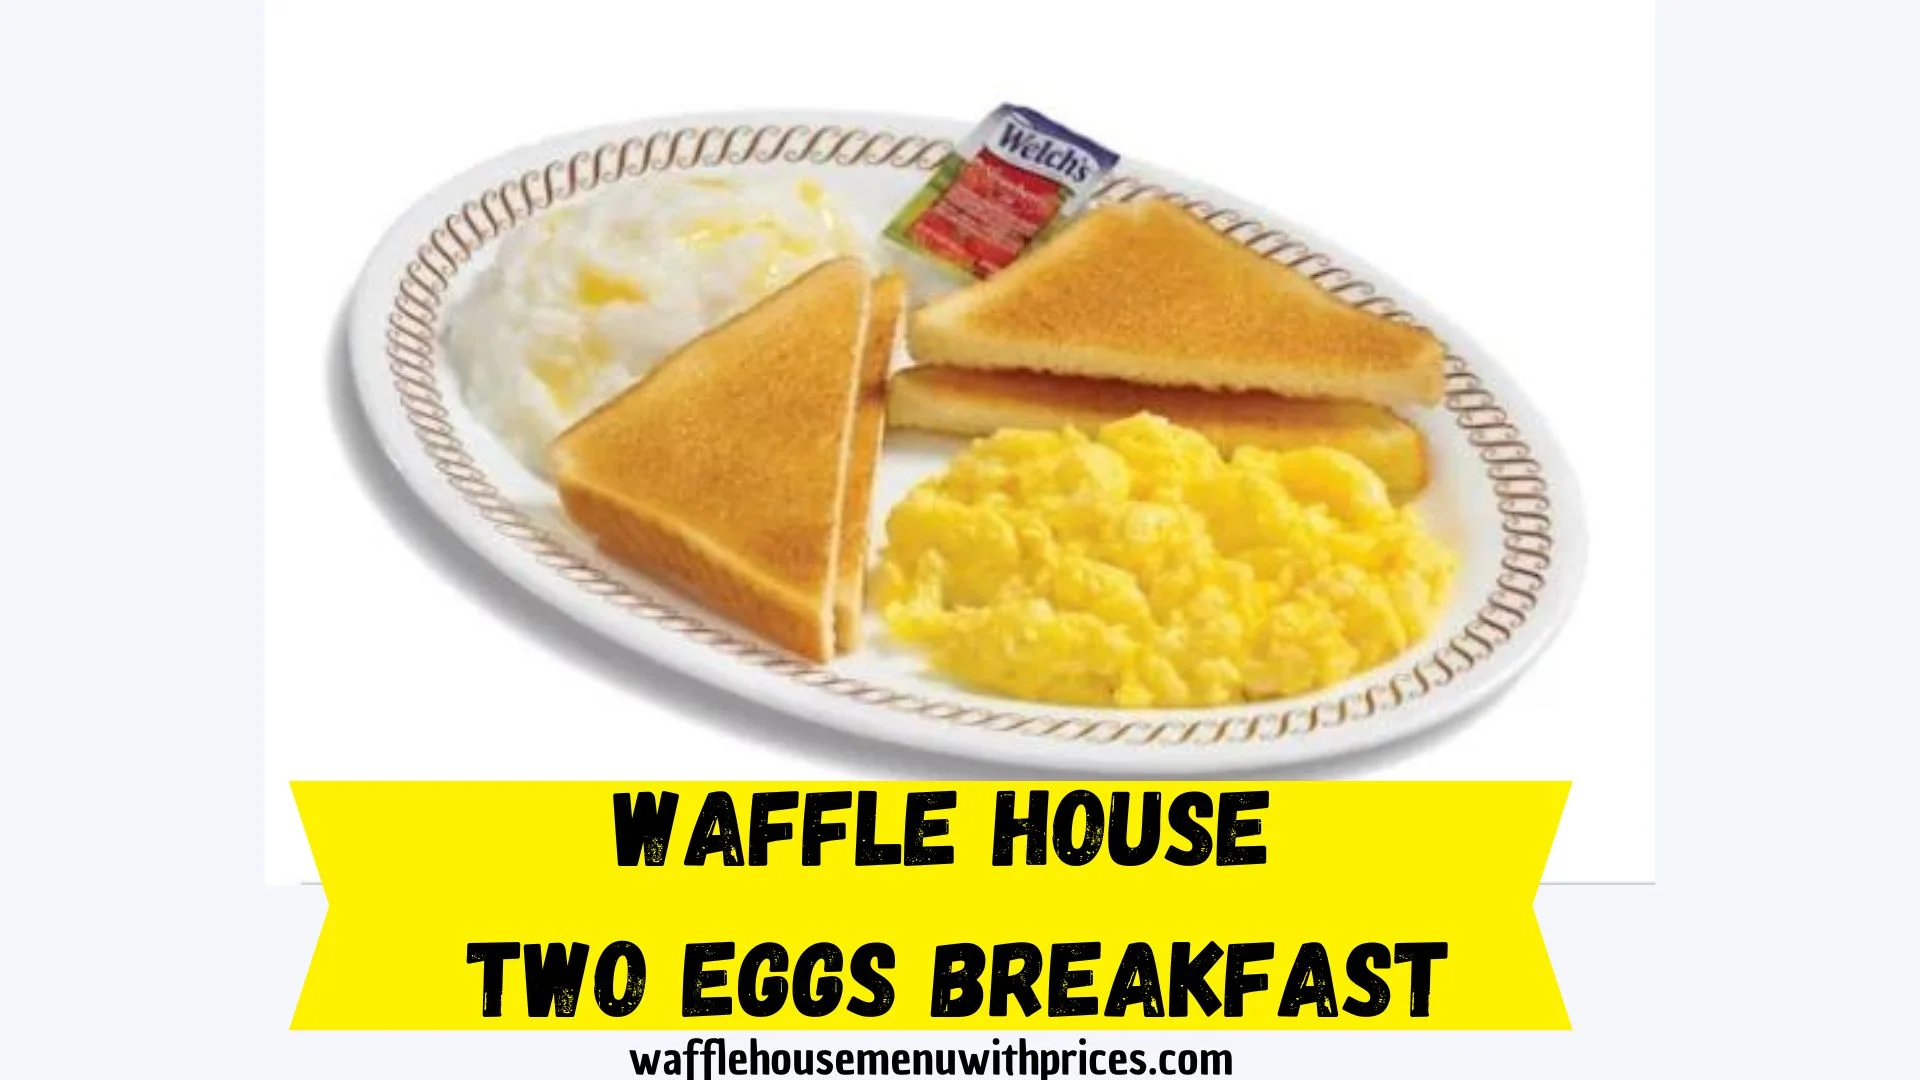 Waffle house two egg breakfast